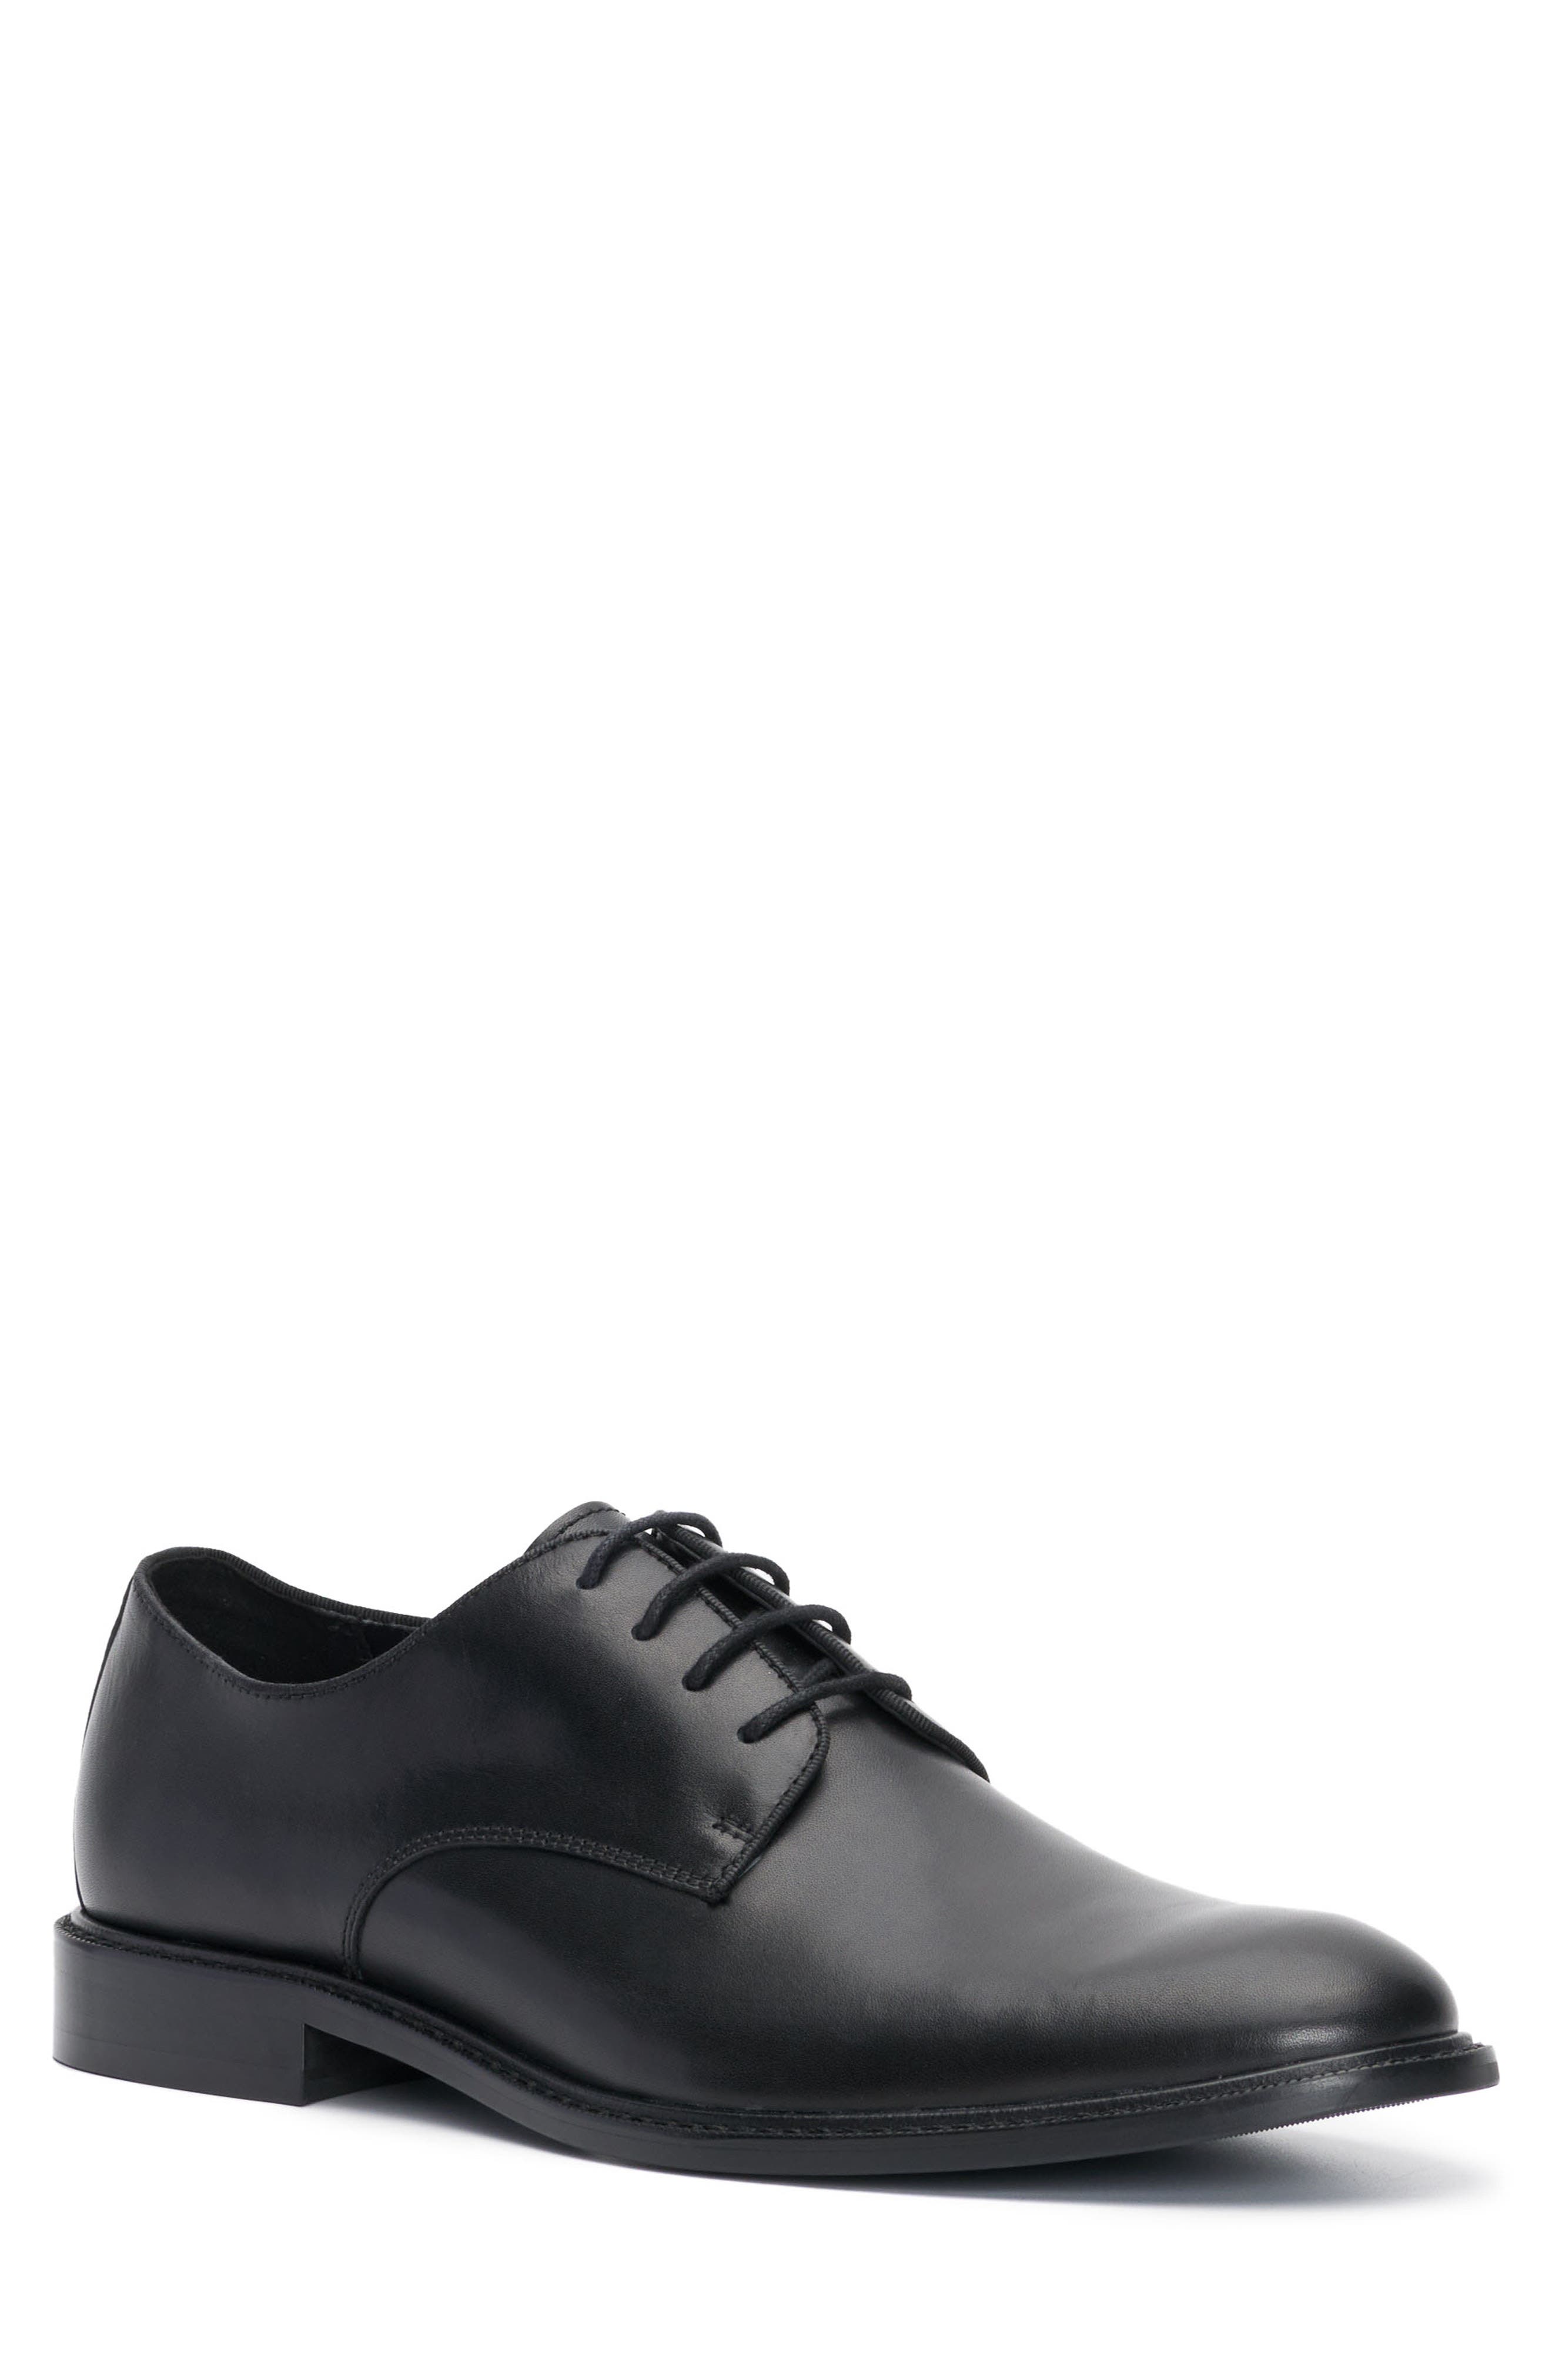 Hugo Boss Men's Square Cap Toe Oxfords Shoes 